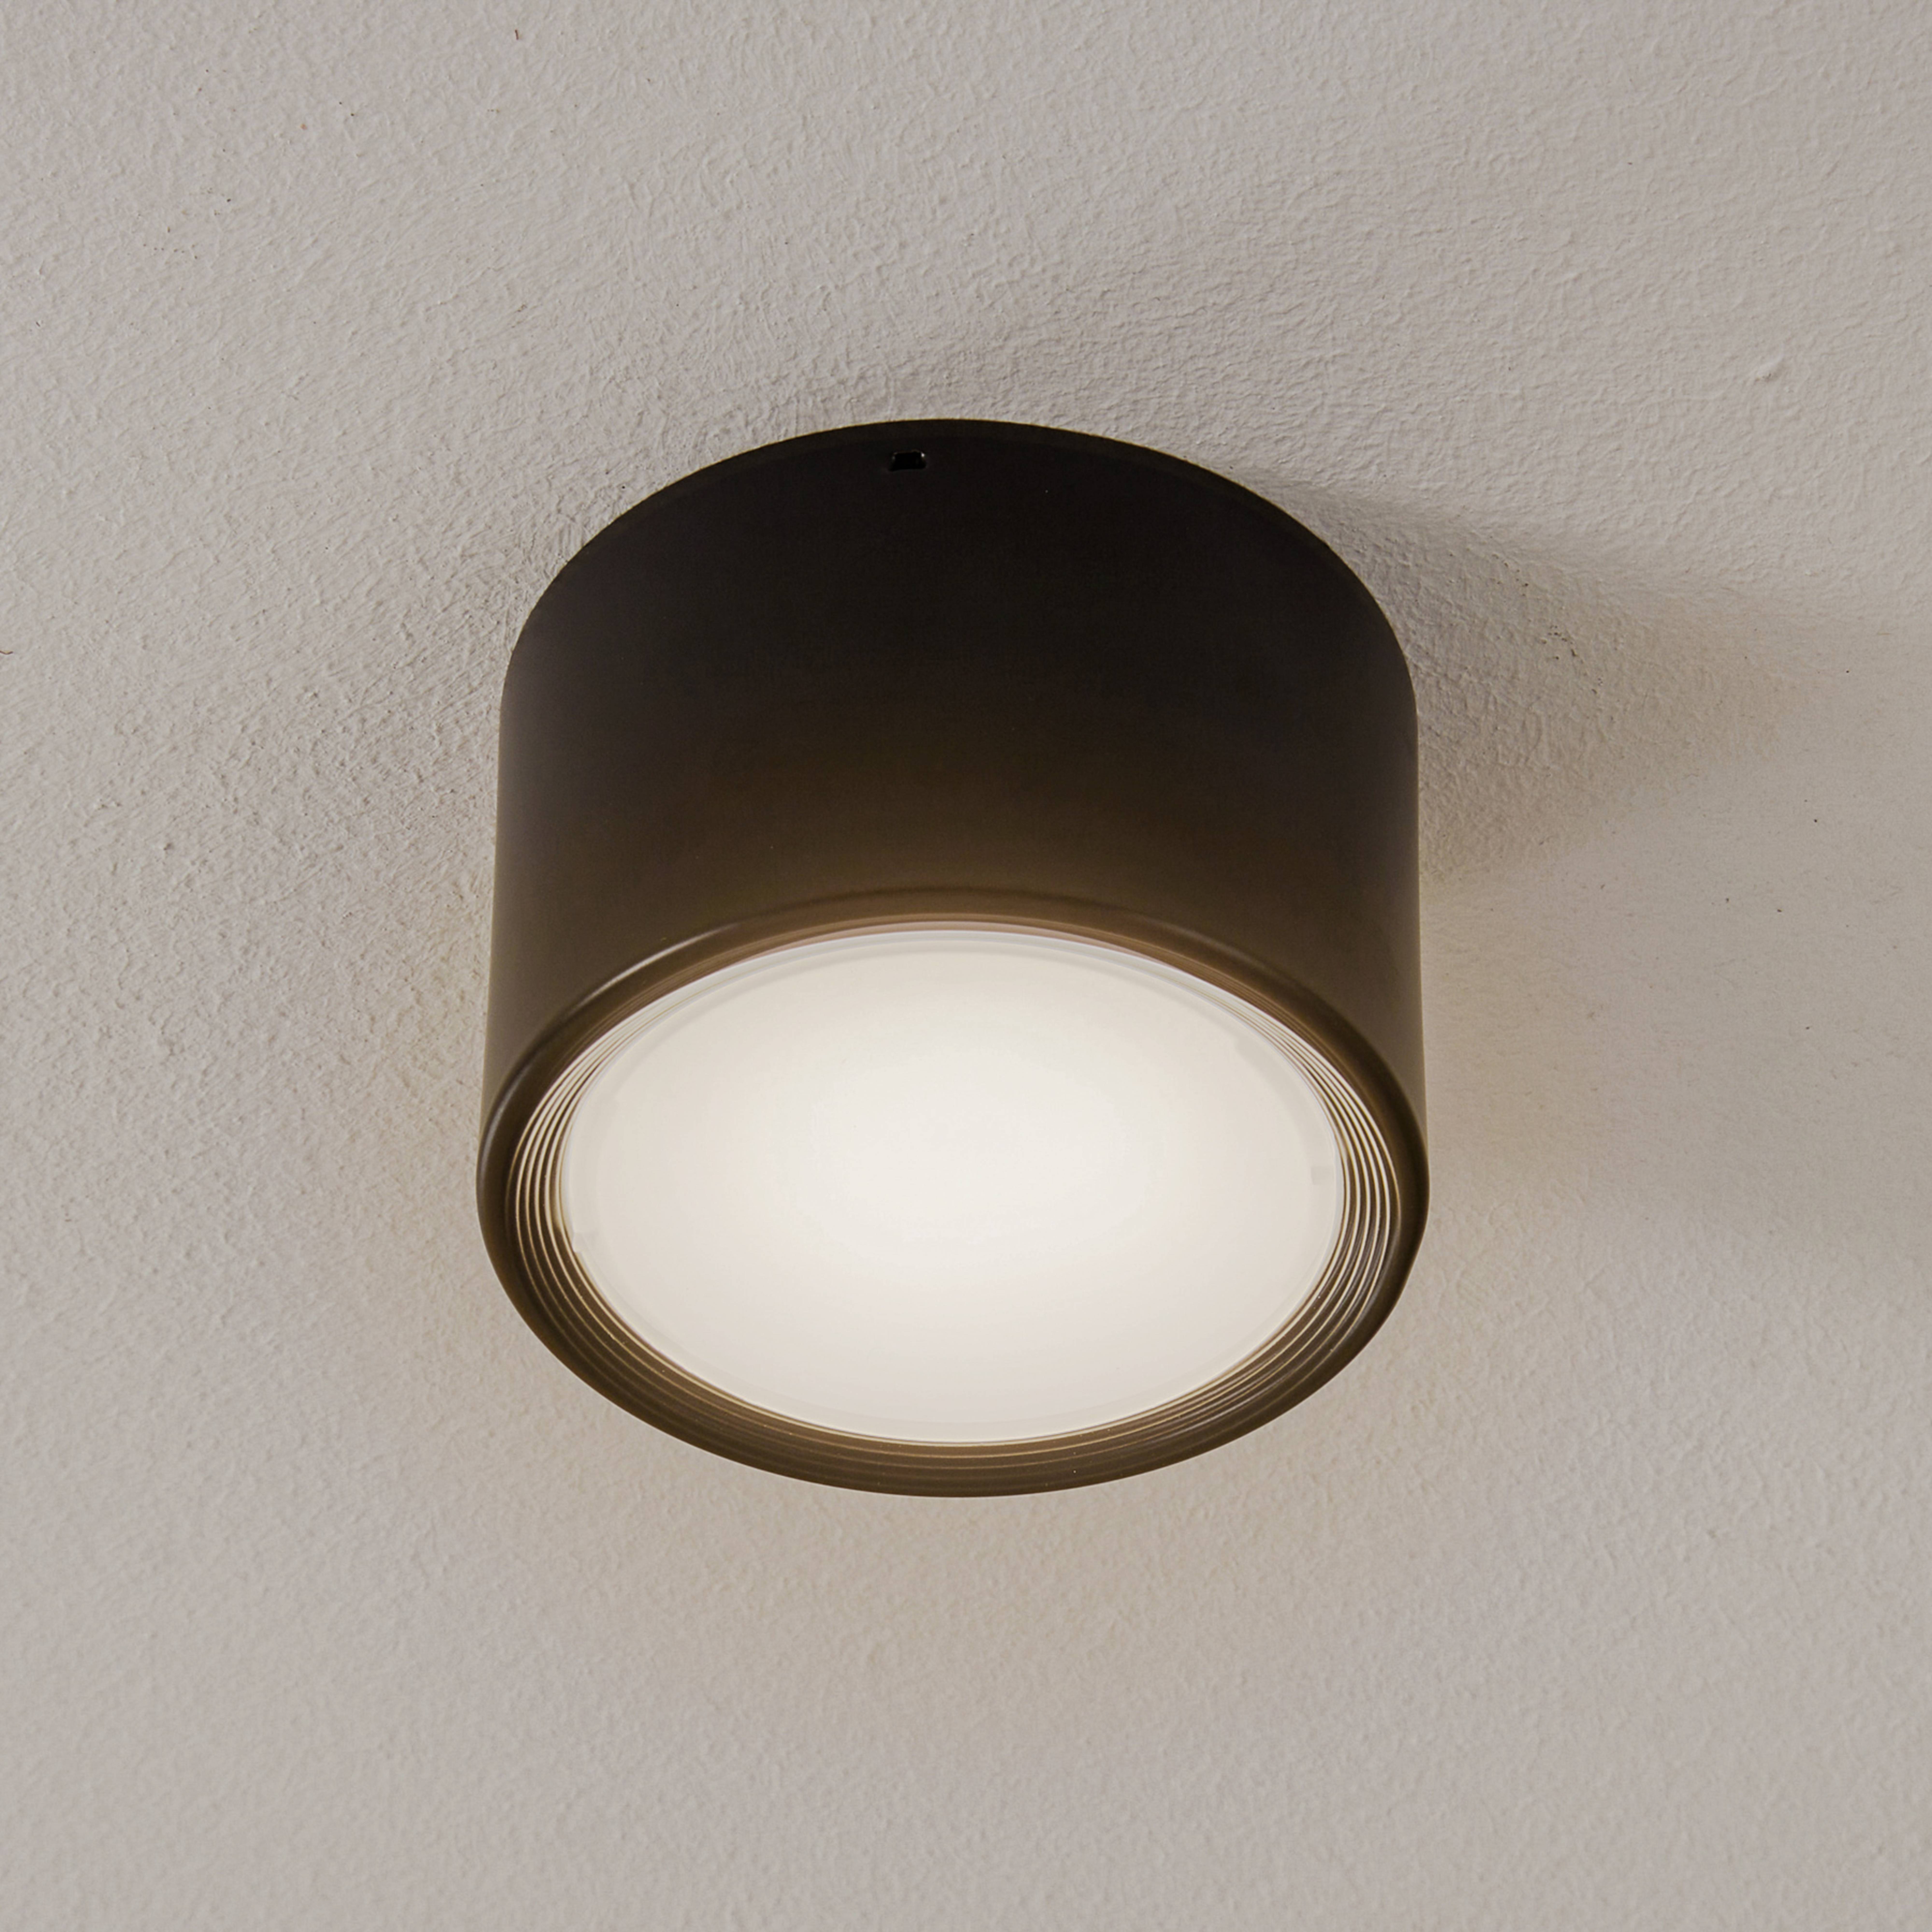 LED downlight Ita en noir avec diffuseur, Ø 12 cm